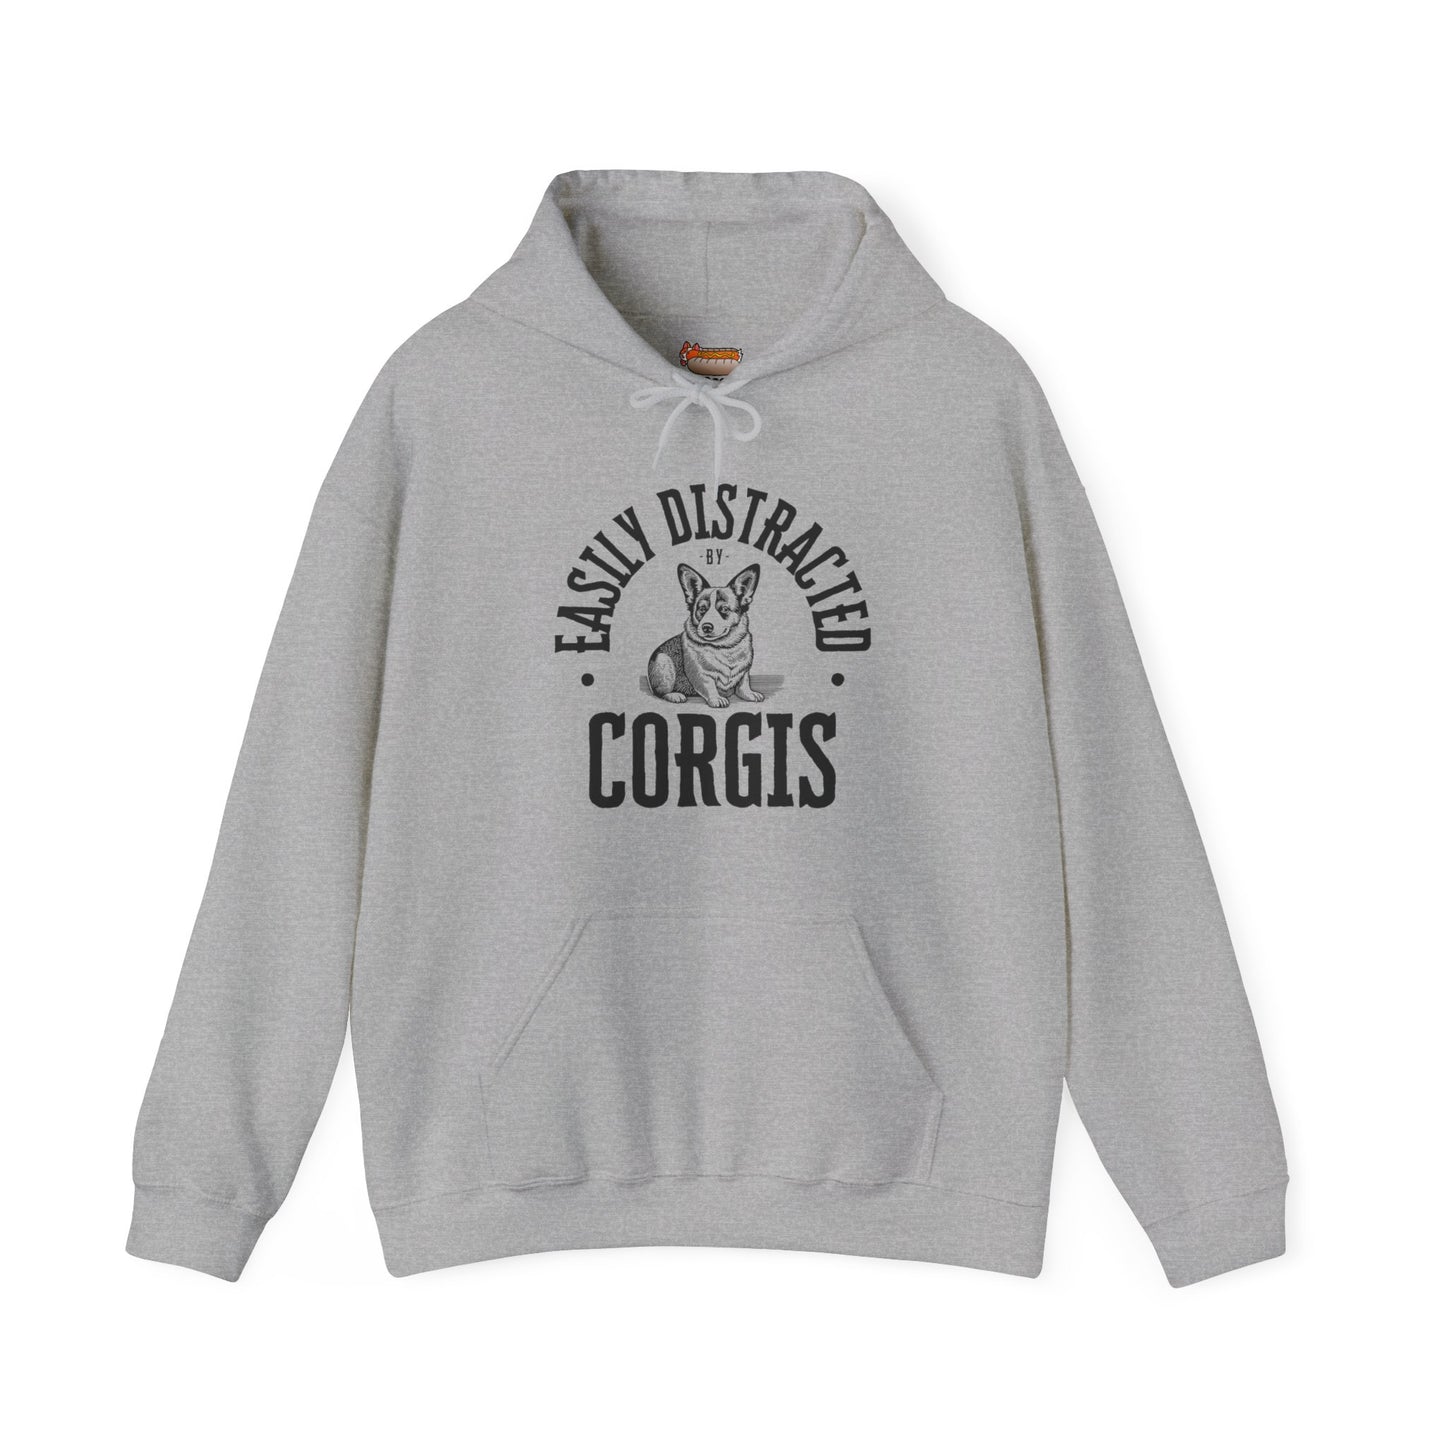 gray corgi hoodie easily distracted women men sweatshirt shirt